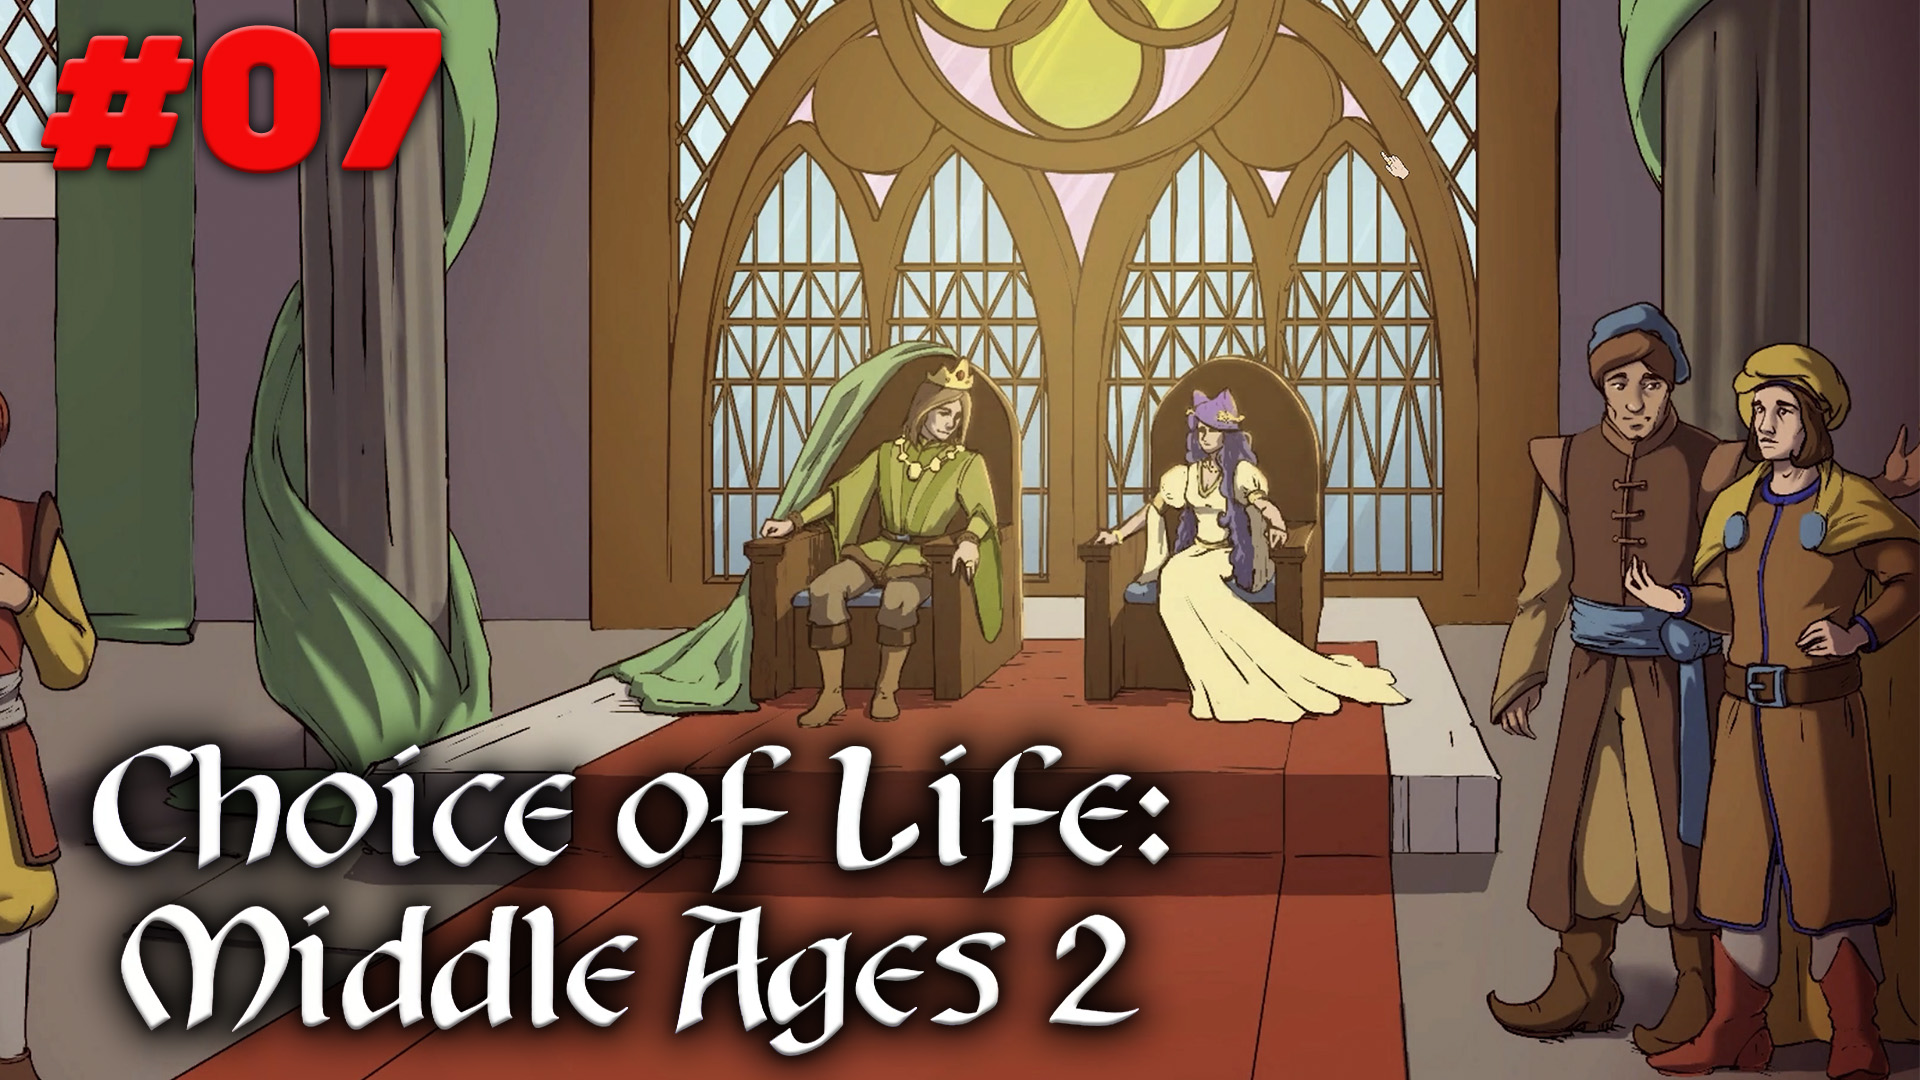 Choice of life middle андроид. The choice of Life Middle ages игра. Choice of Life: Middle ages 2 Элис. Серпантина choice of Life Middle ages 2. Choice of Life: Middle ages Элис.